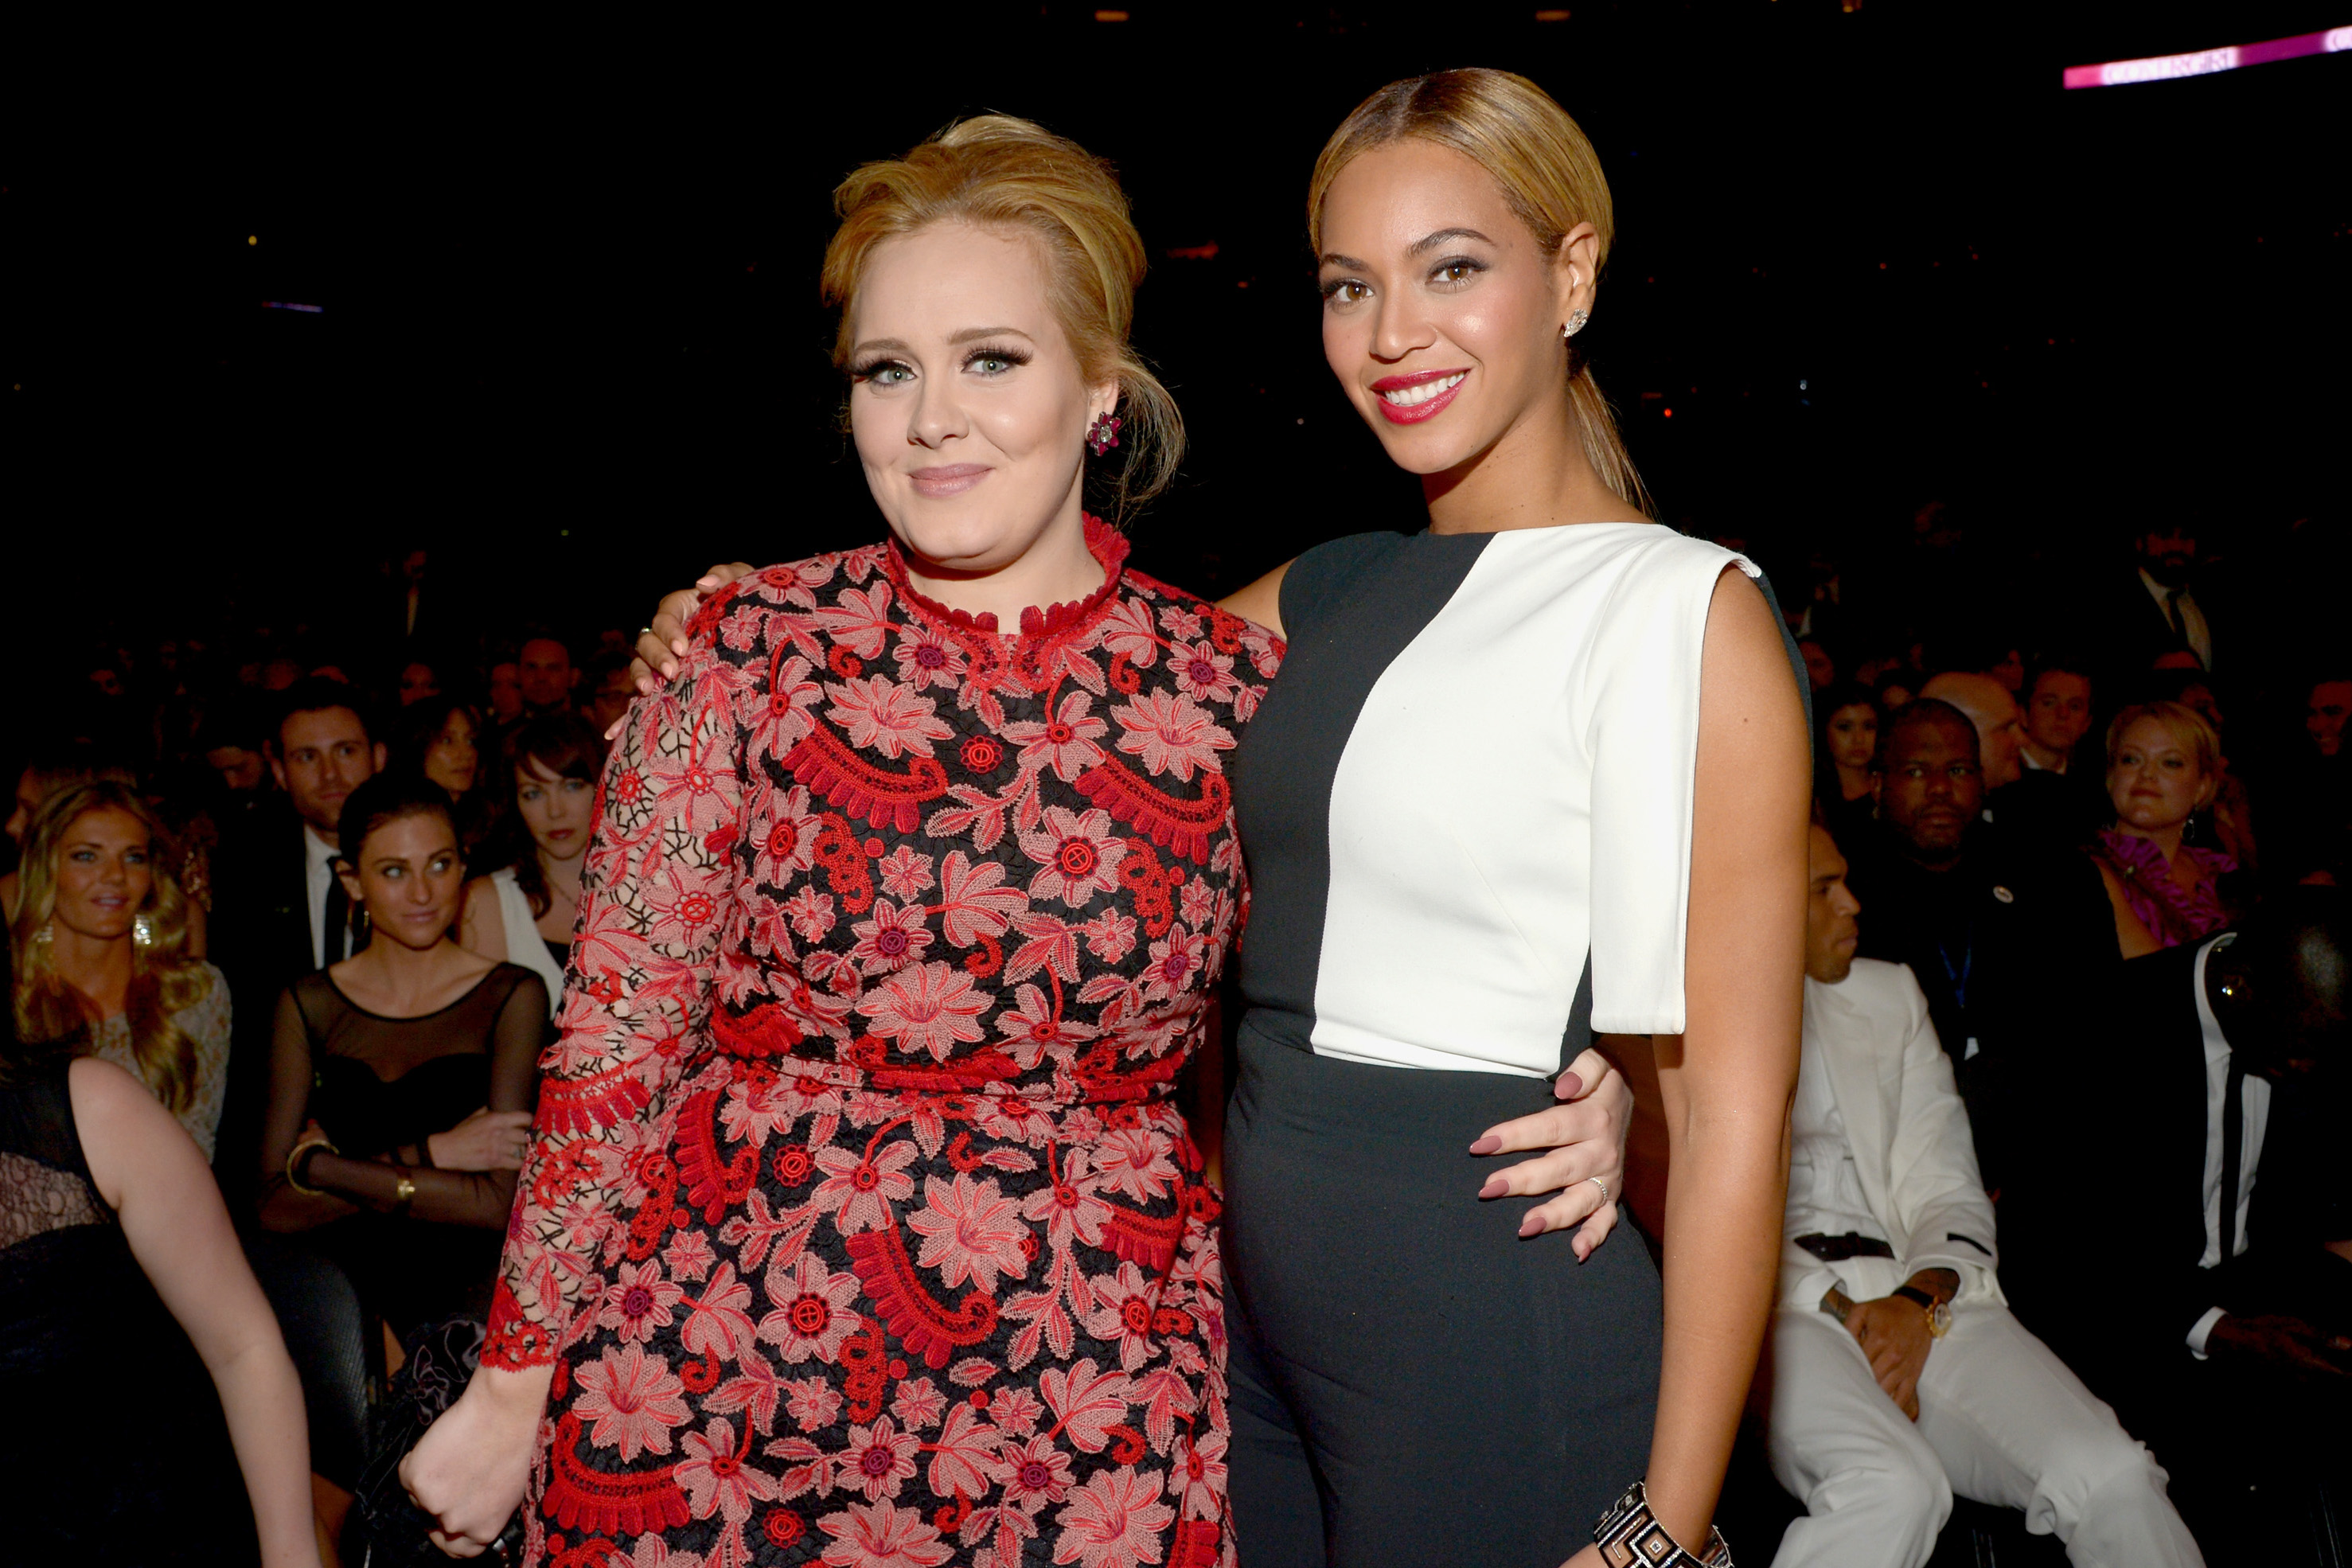 Adele Breaks Her Grammy For Album Of The Year in Half